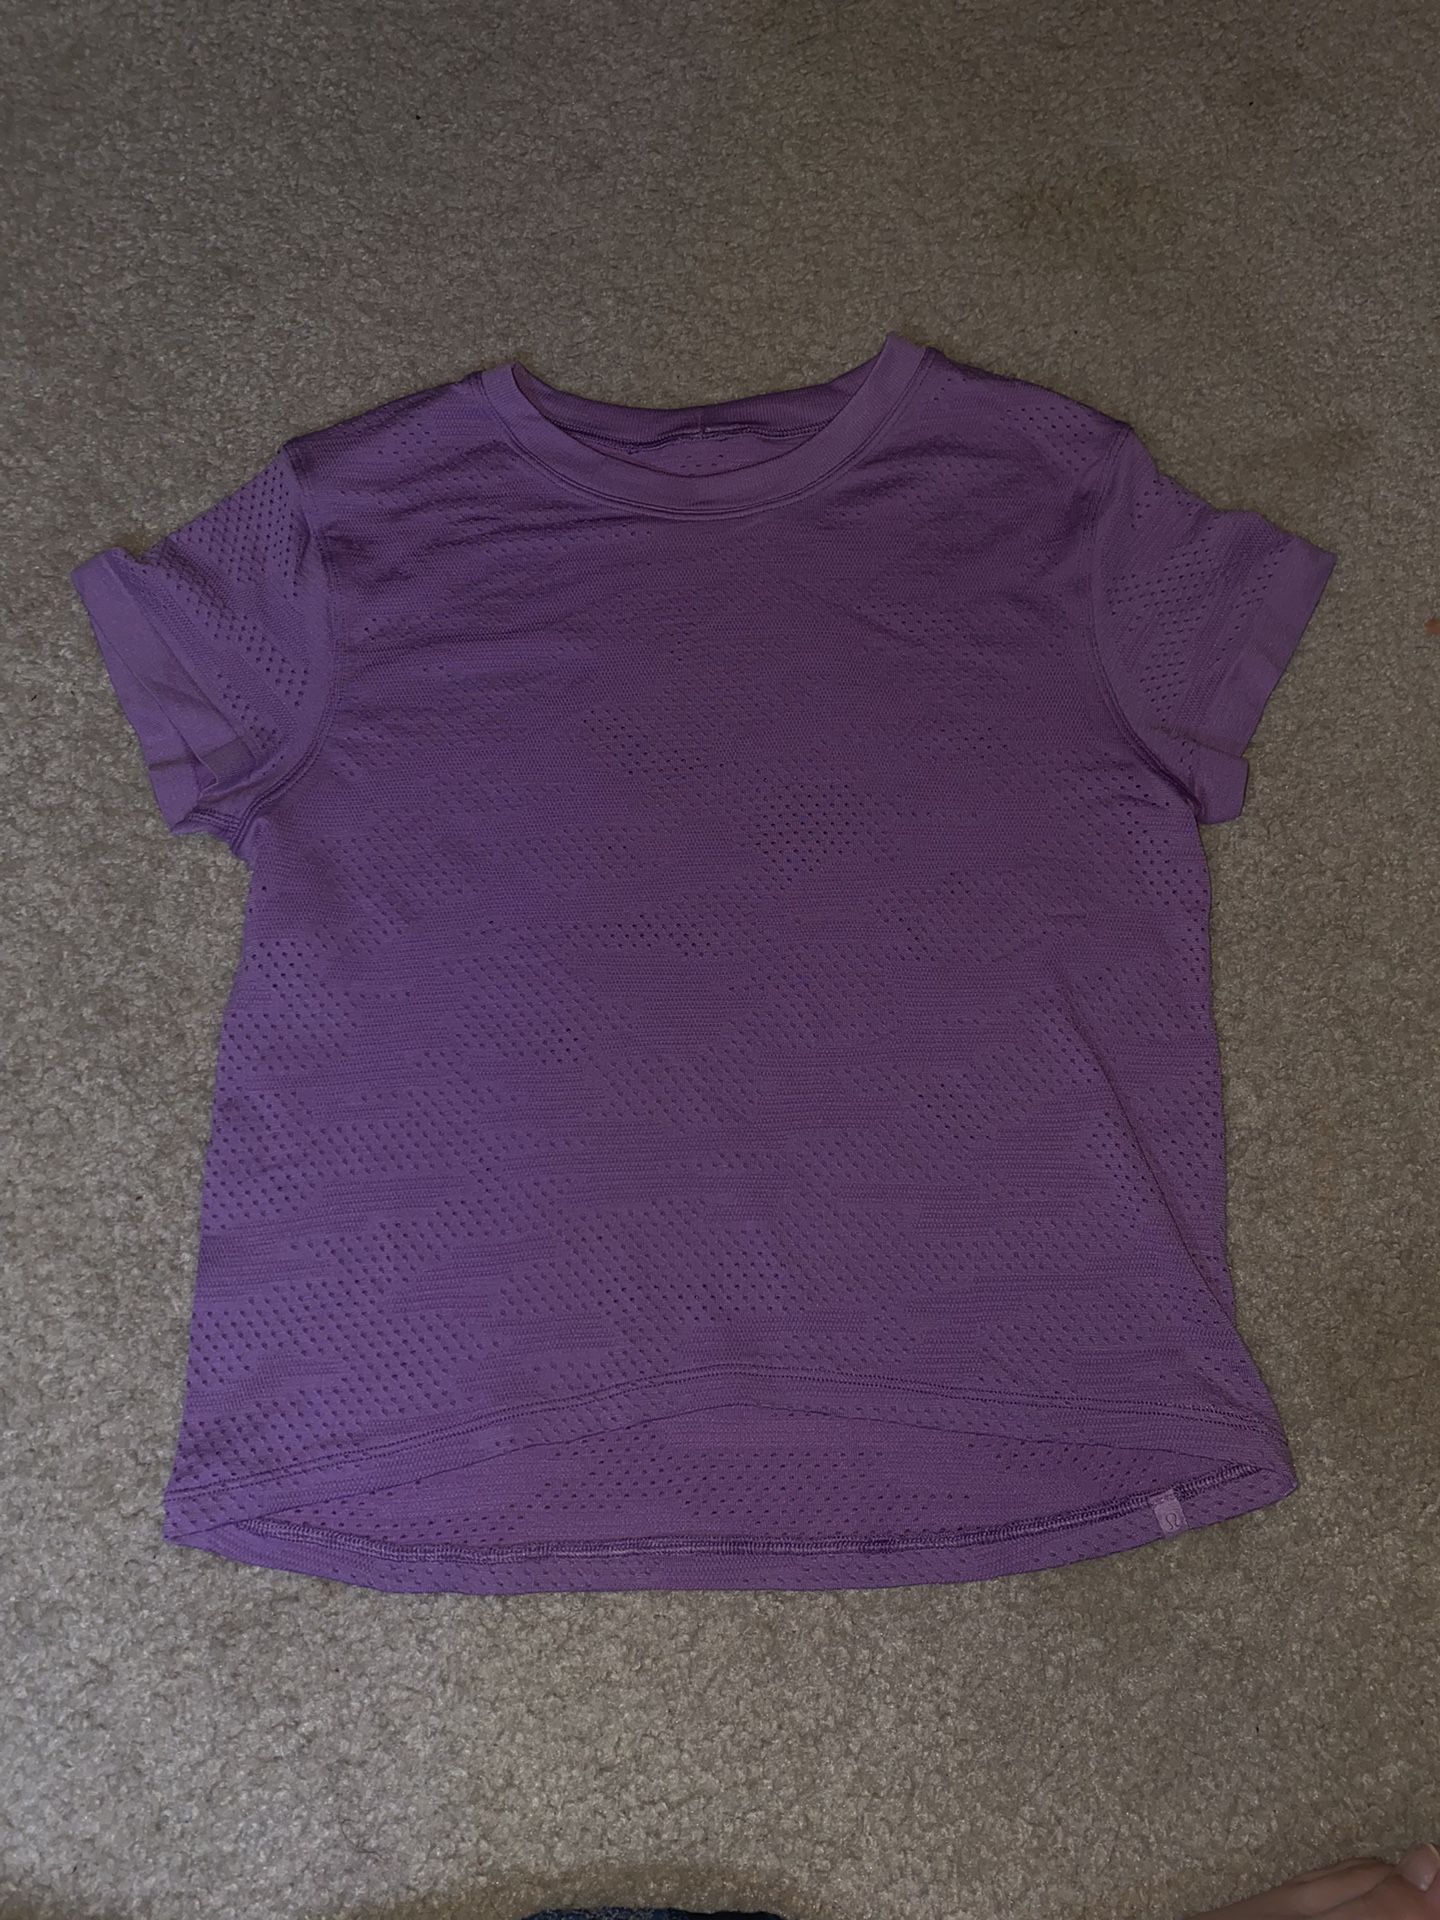 Purple Lululemon Camo shirt